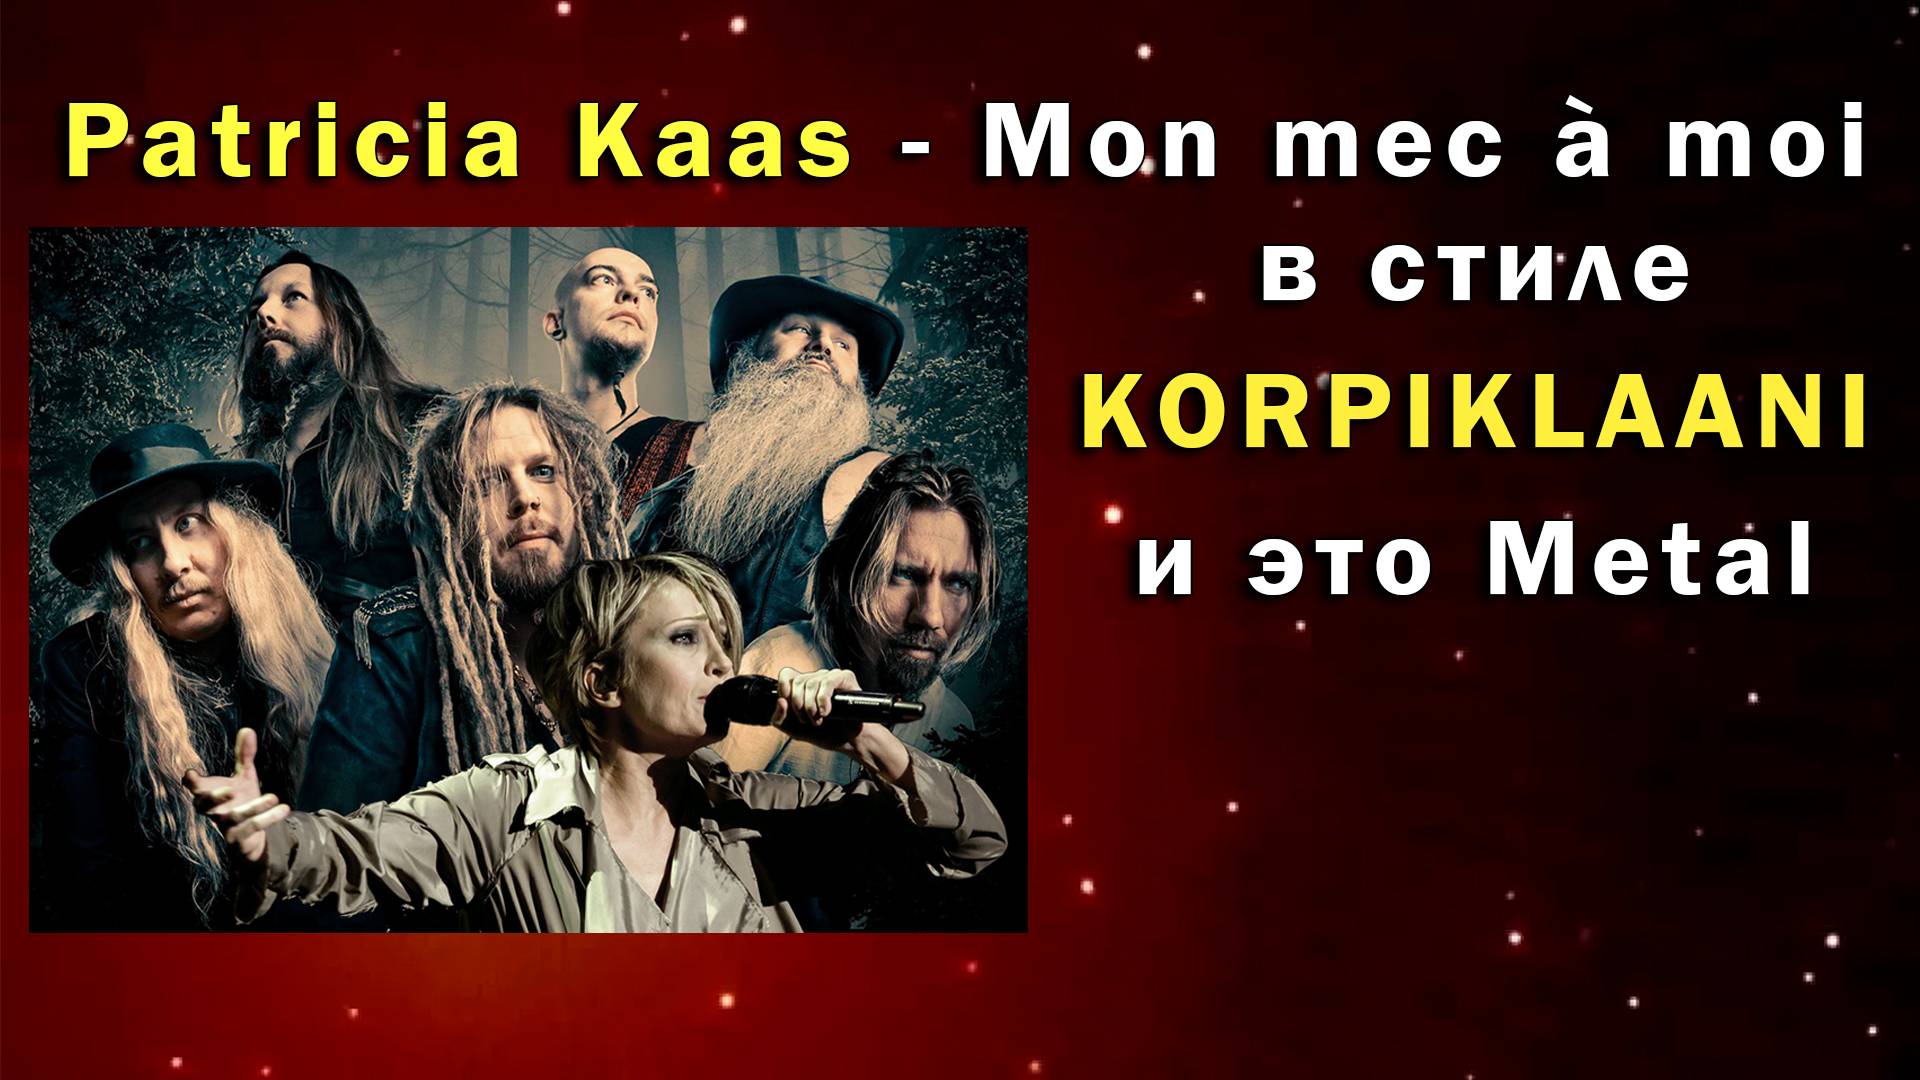 Патрисия Каас -  Mon mec à moi но это Korpiklaani Metal кавер версия